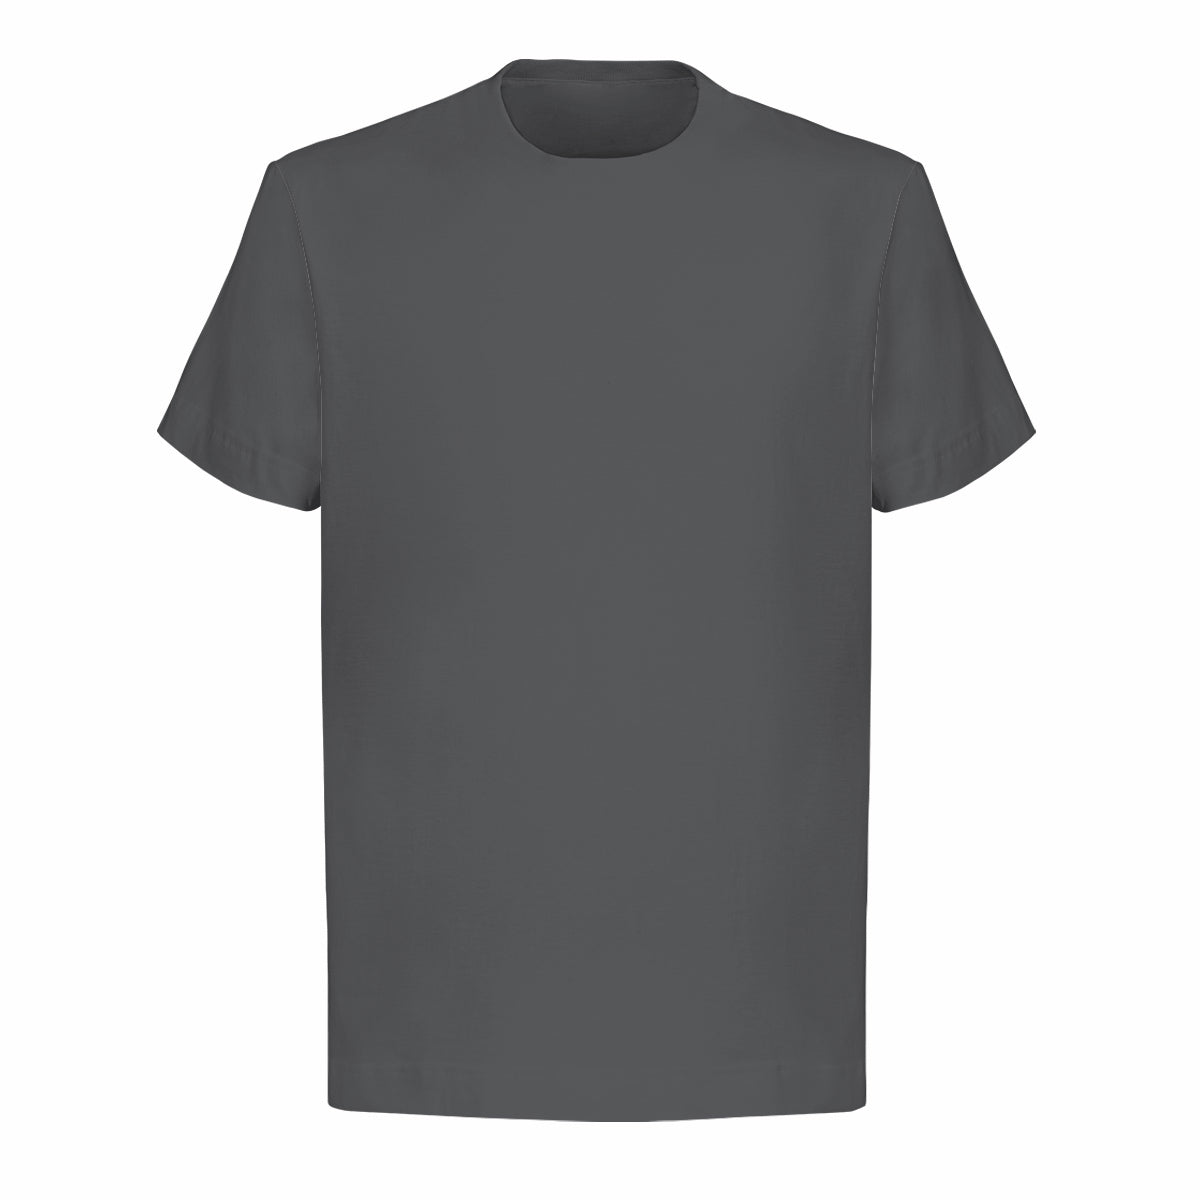 HSV GTS-R W1 T-Shirt